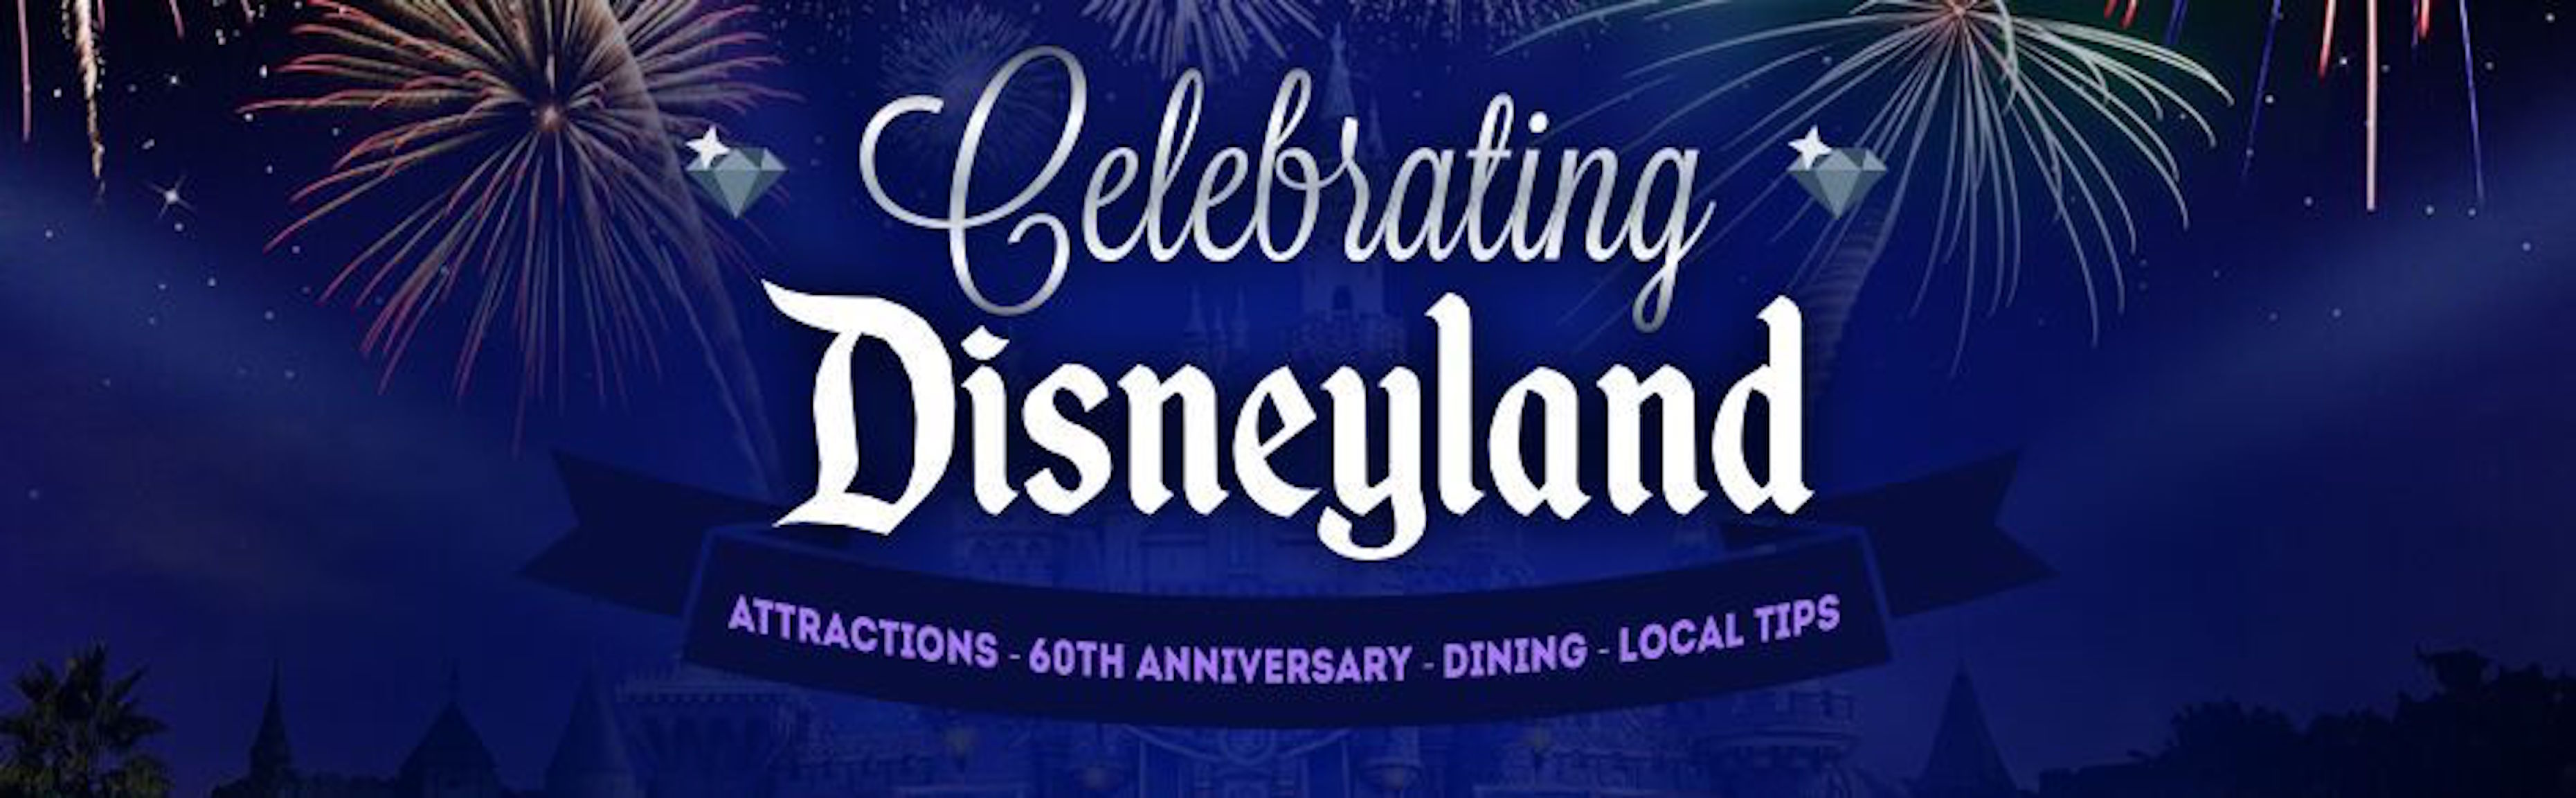 Celebrating Disneyland – 06/20/16 – Week 3 Trivia Contest & Show